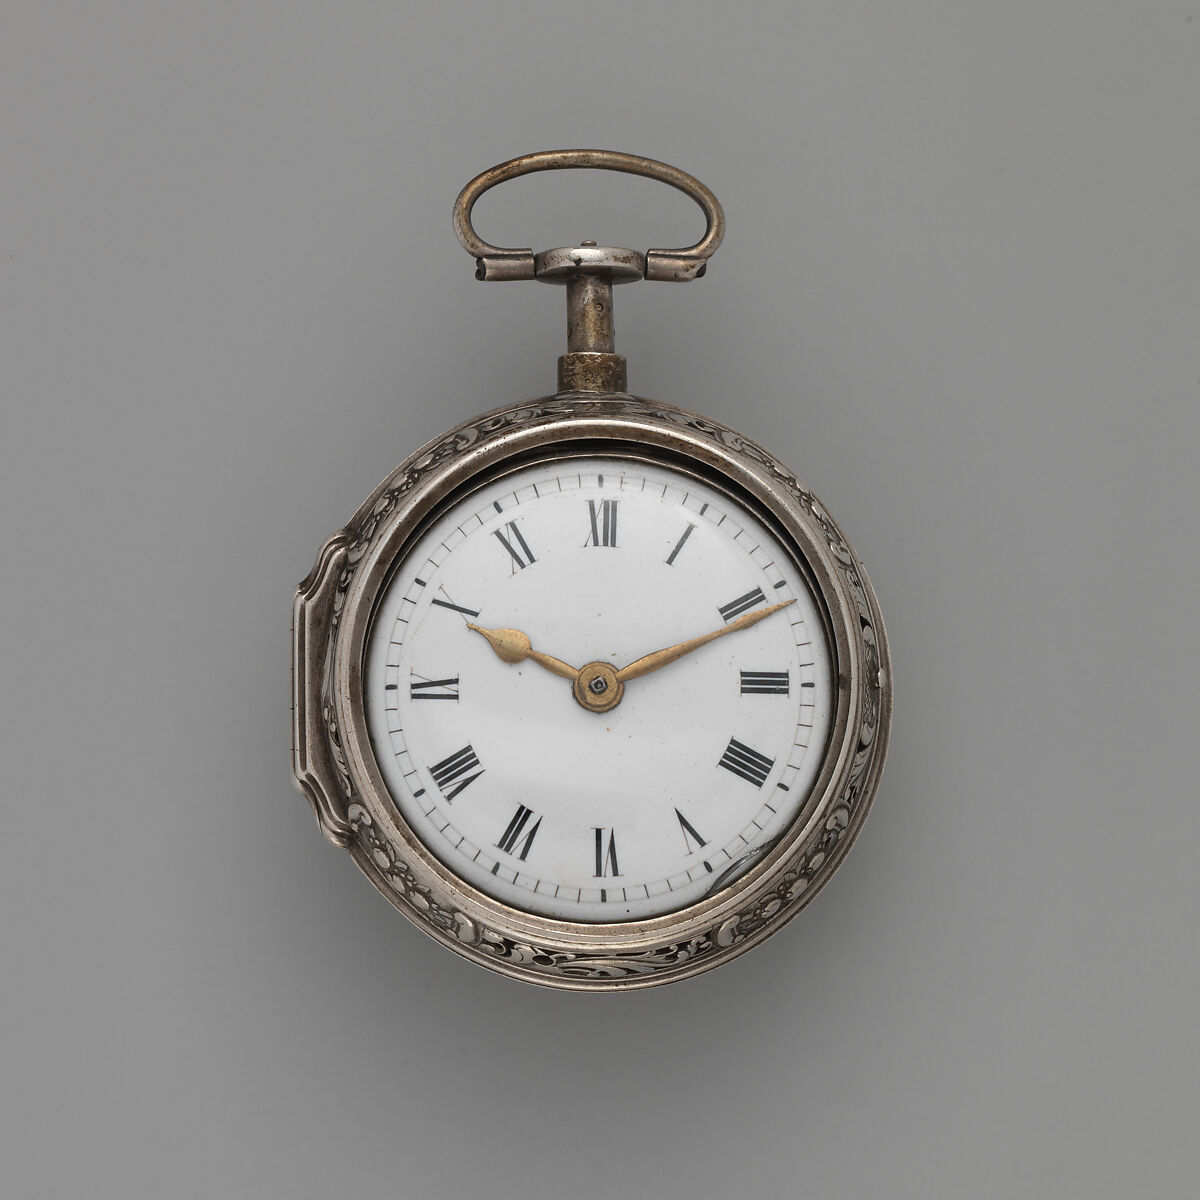 Clock-watch, Watchmaker: Gabriel Tallans, Silver, enamel, British, London 